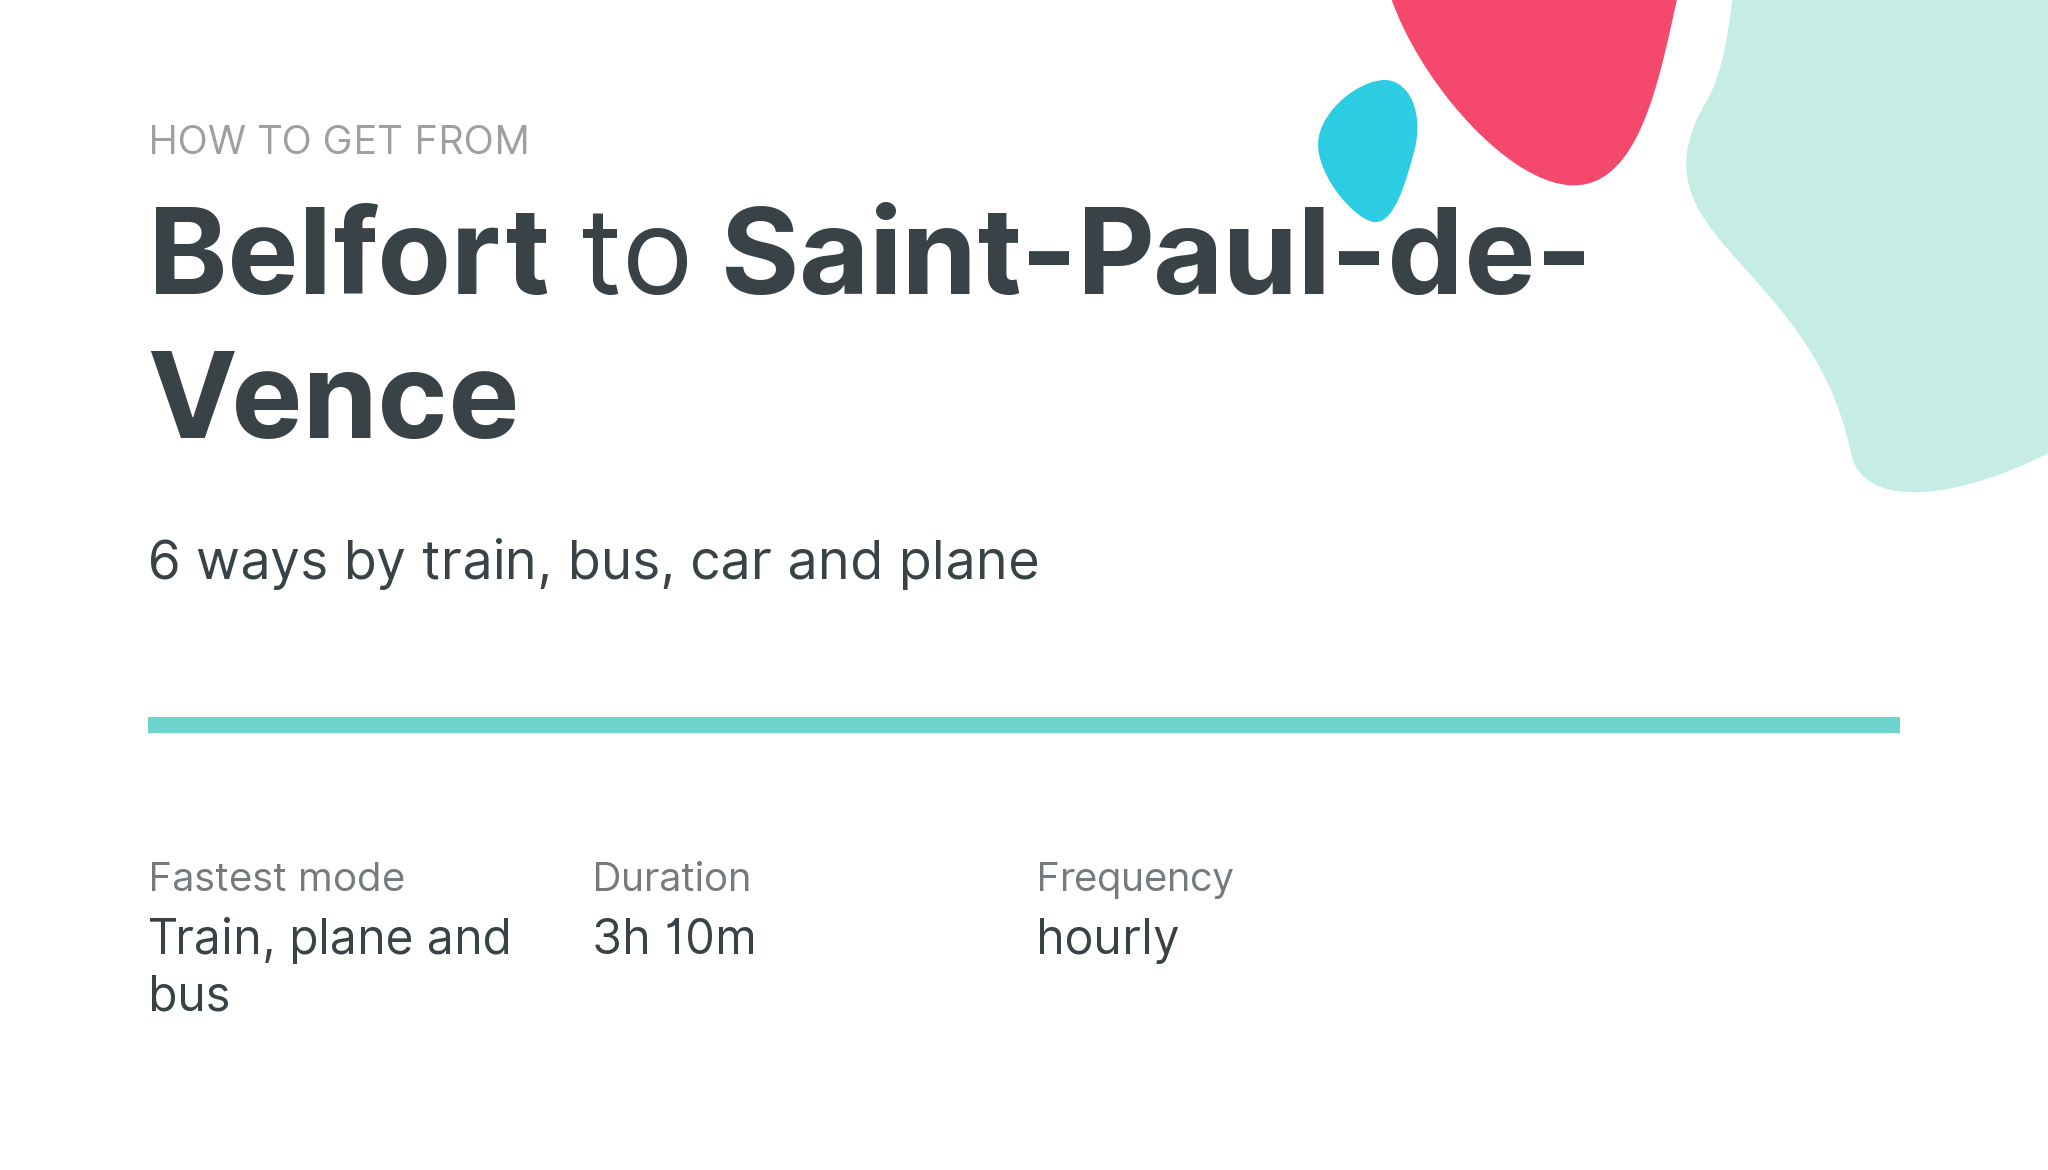 How do I get from Belfort to Saint-Paul-de-Vence